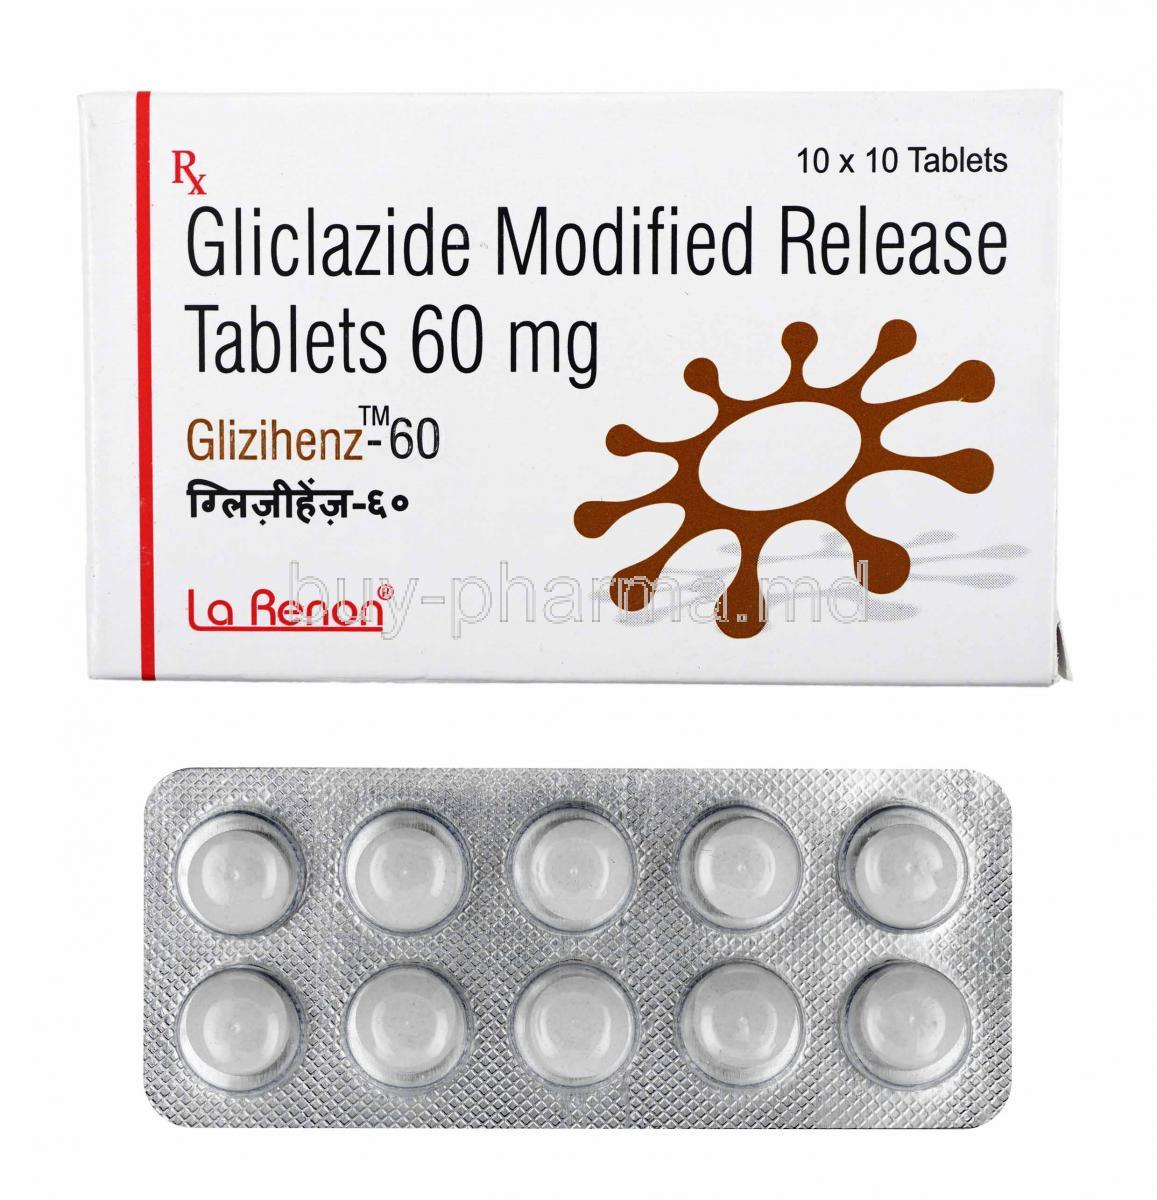 Glizihenz, Gliclazide box and tablets